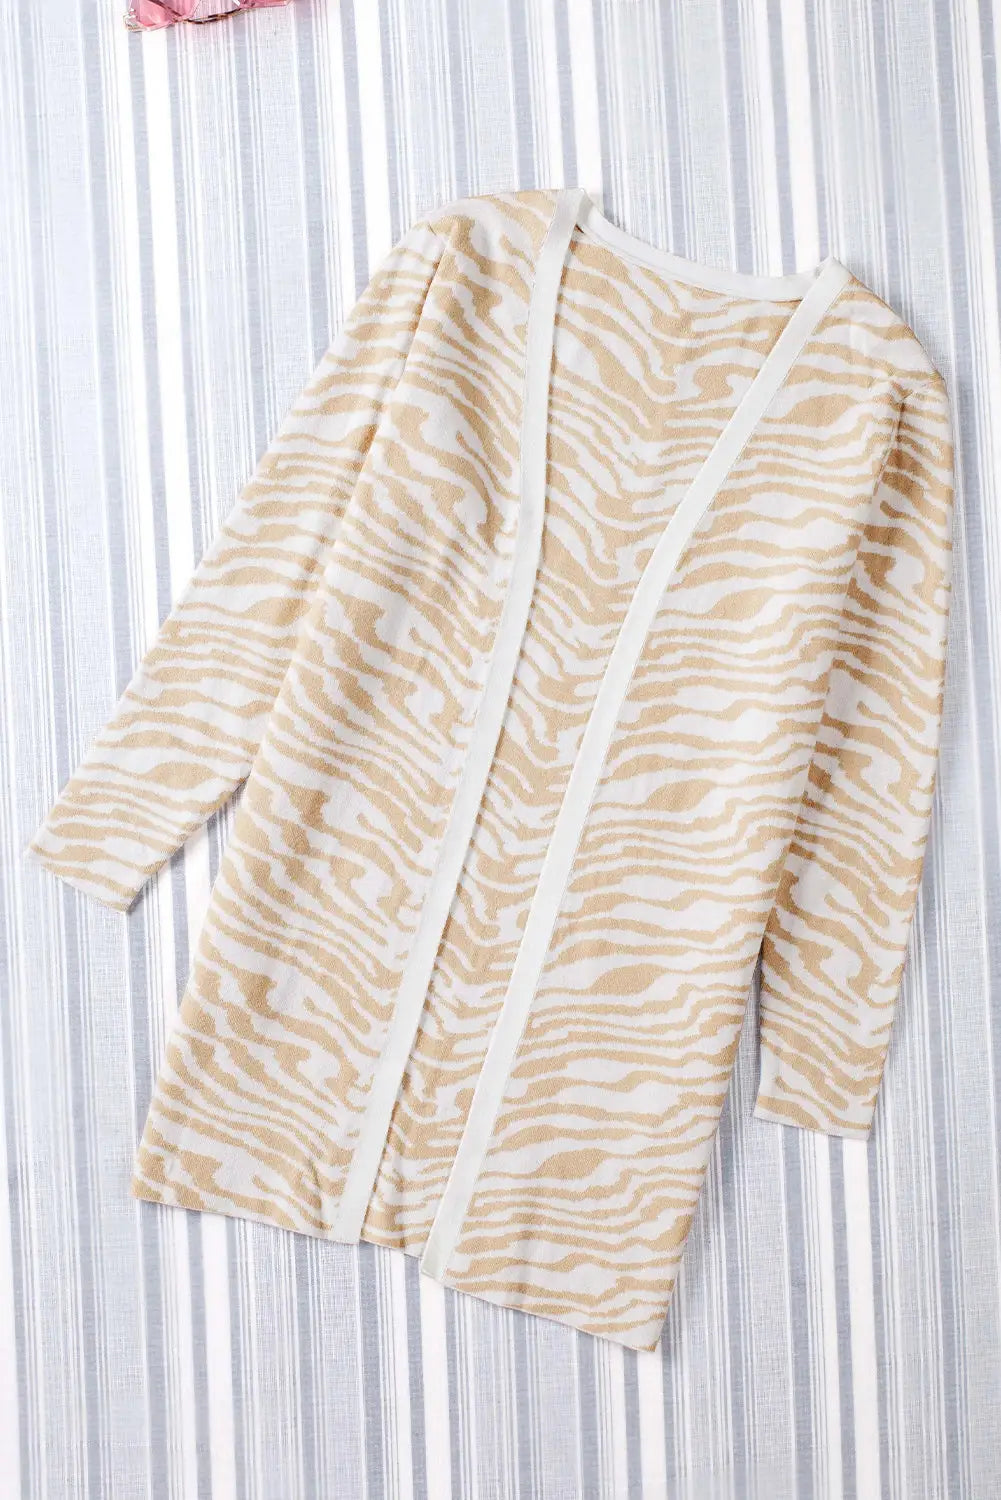 Apricot zebra print open front long cardigan - tops